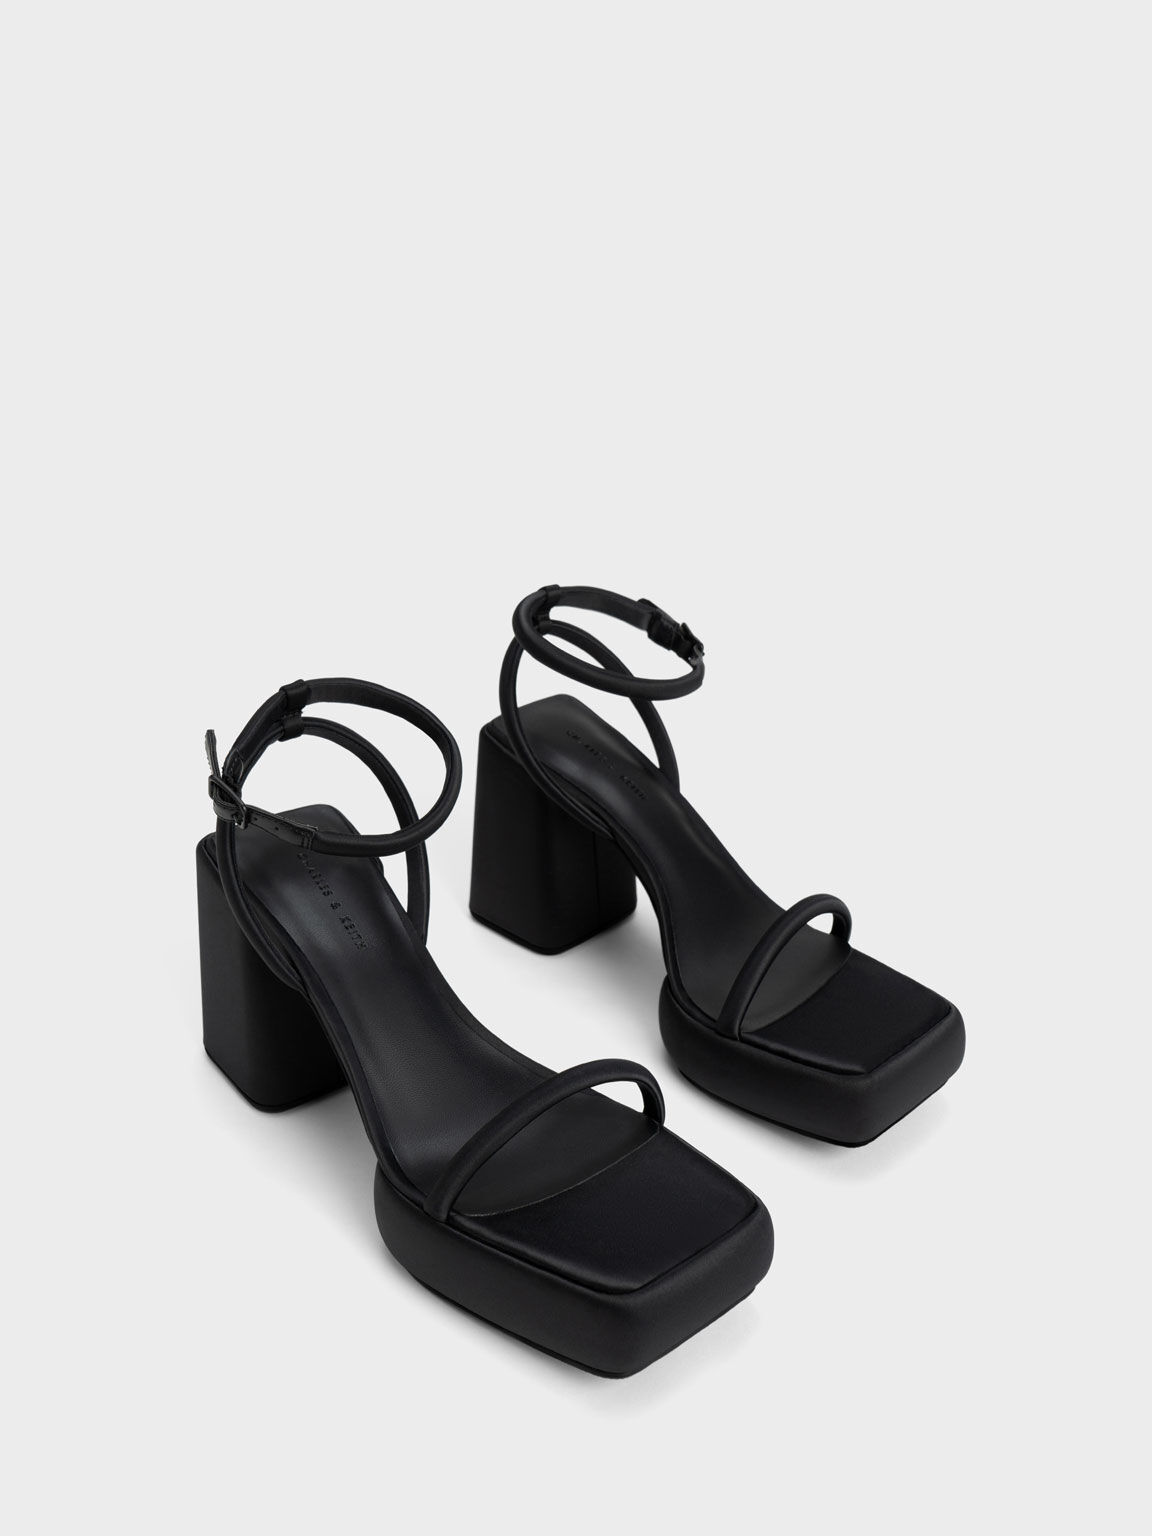 Topshop Roxi Strappy Platform Heeled Sandal In Black Croc | ModeSens